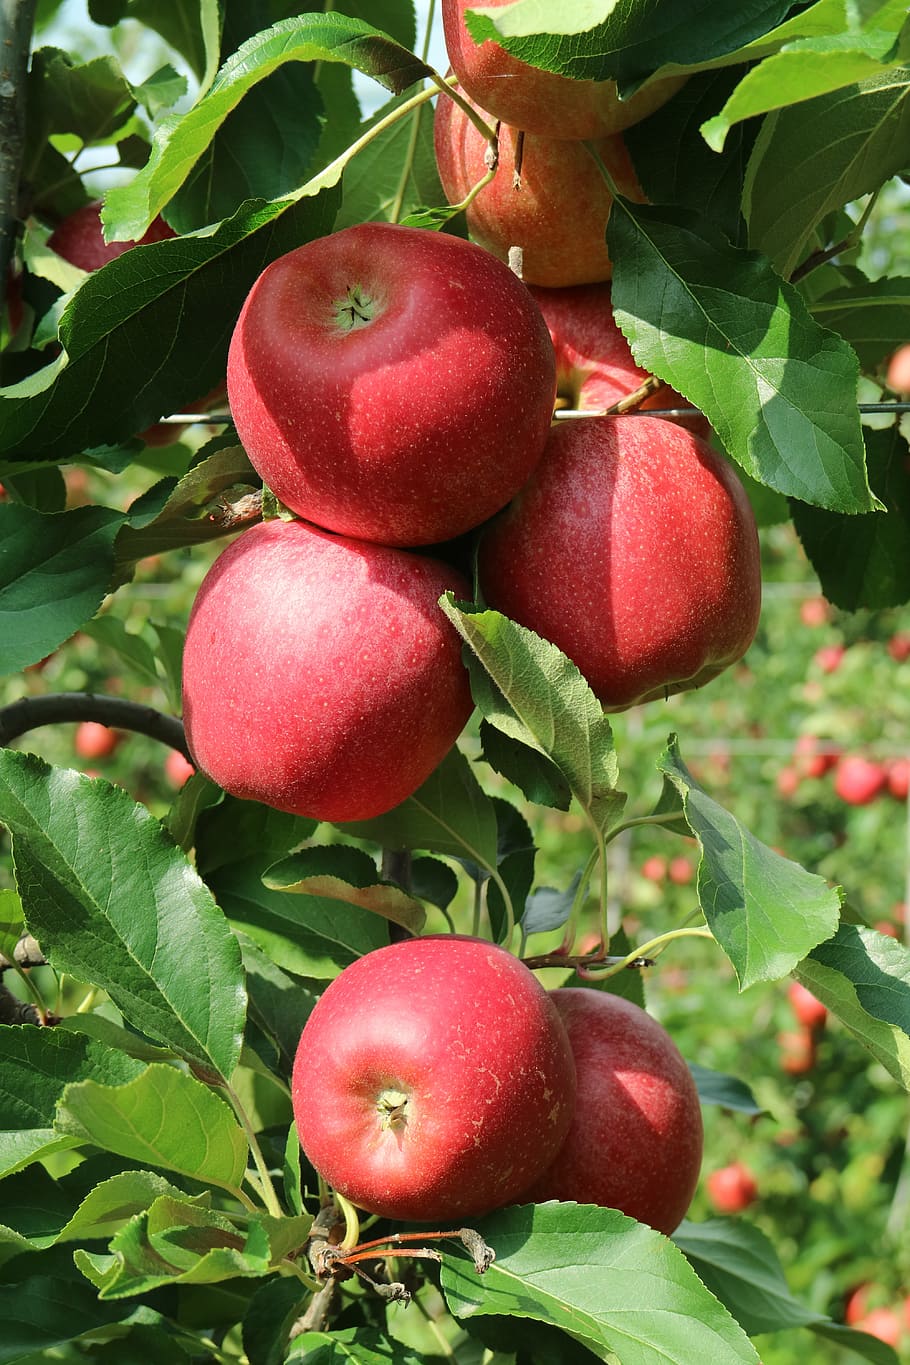 Apples, Valtellina, Lombardy, apples valtellina, nice apples, red apple, italy, fruit, foods, nature